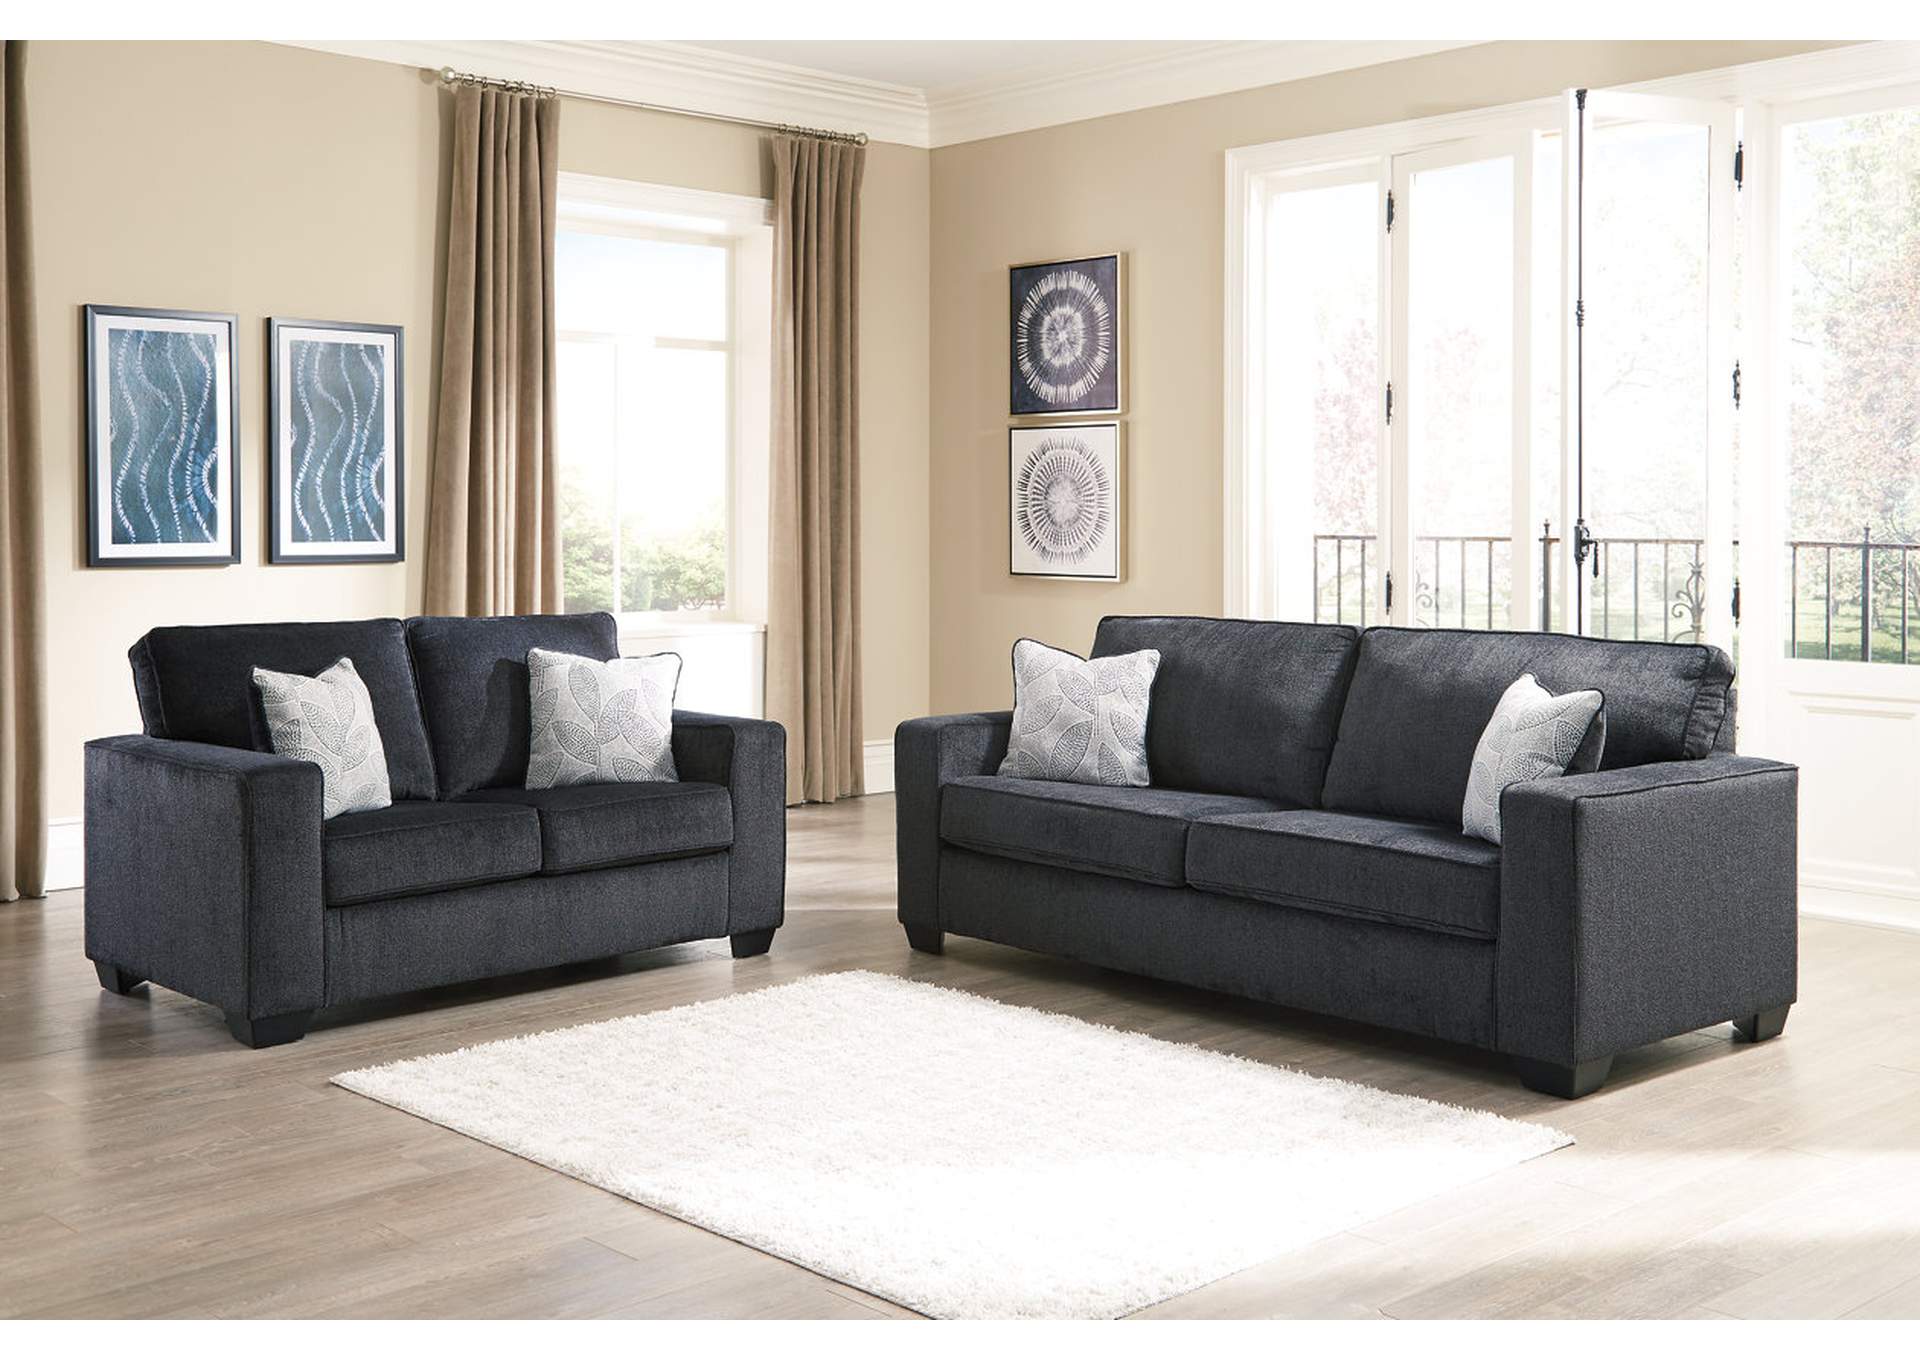 Altari Queen Sofa Sleeper Ashley Furniture Homestore - Independently